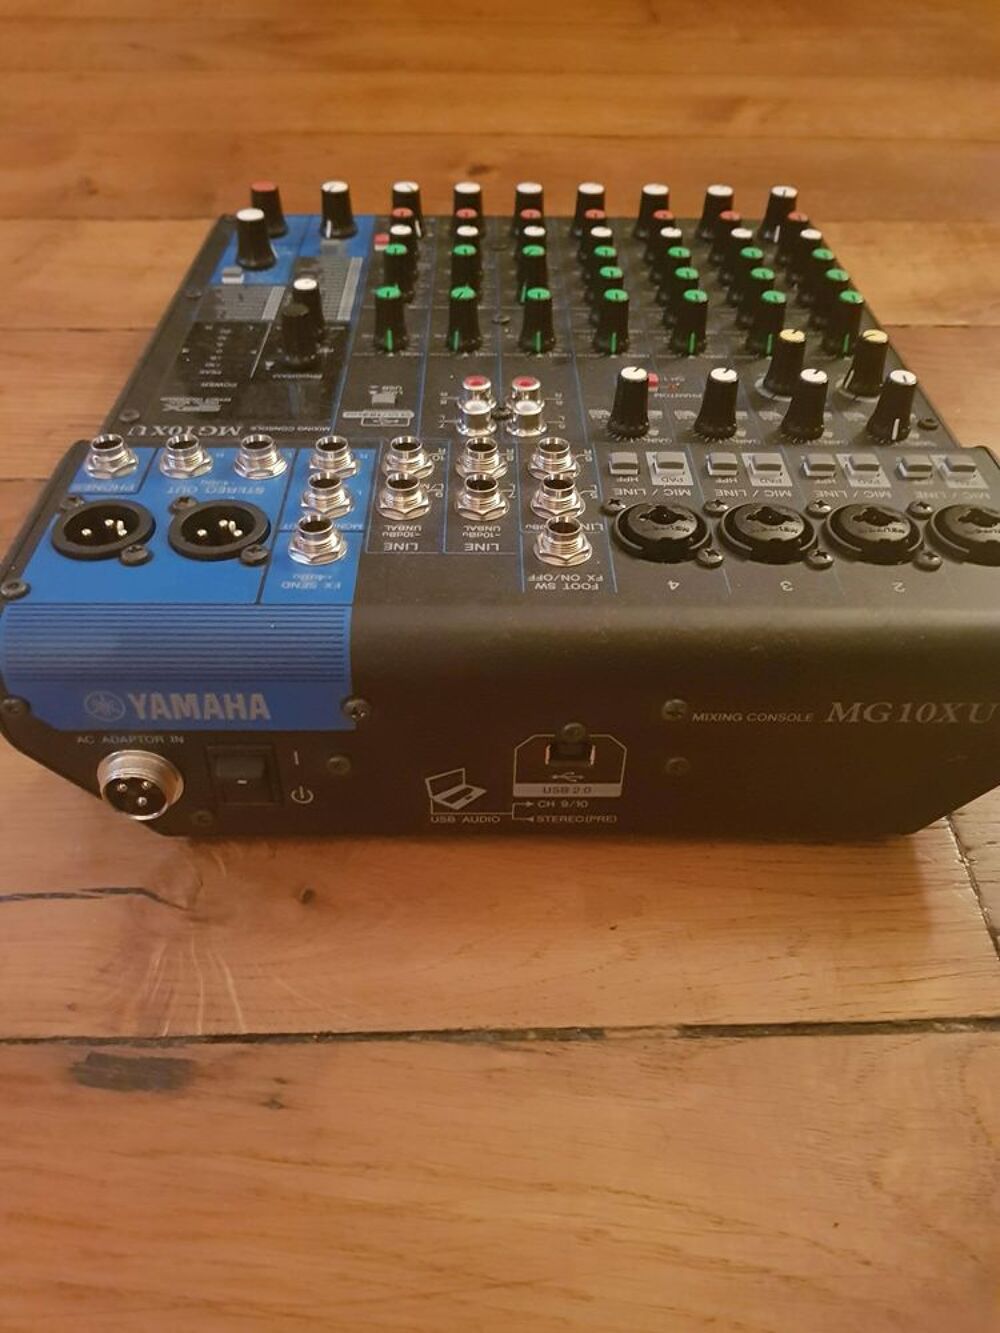 Vend console de mixage Yamaha MG10XU Audio et hifi